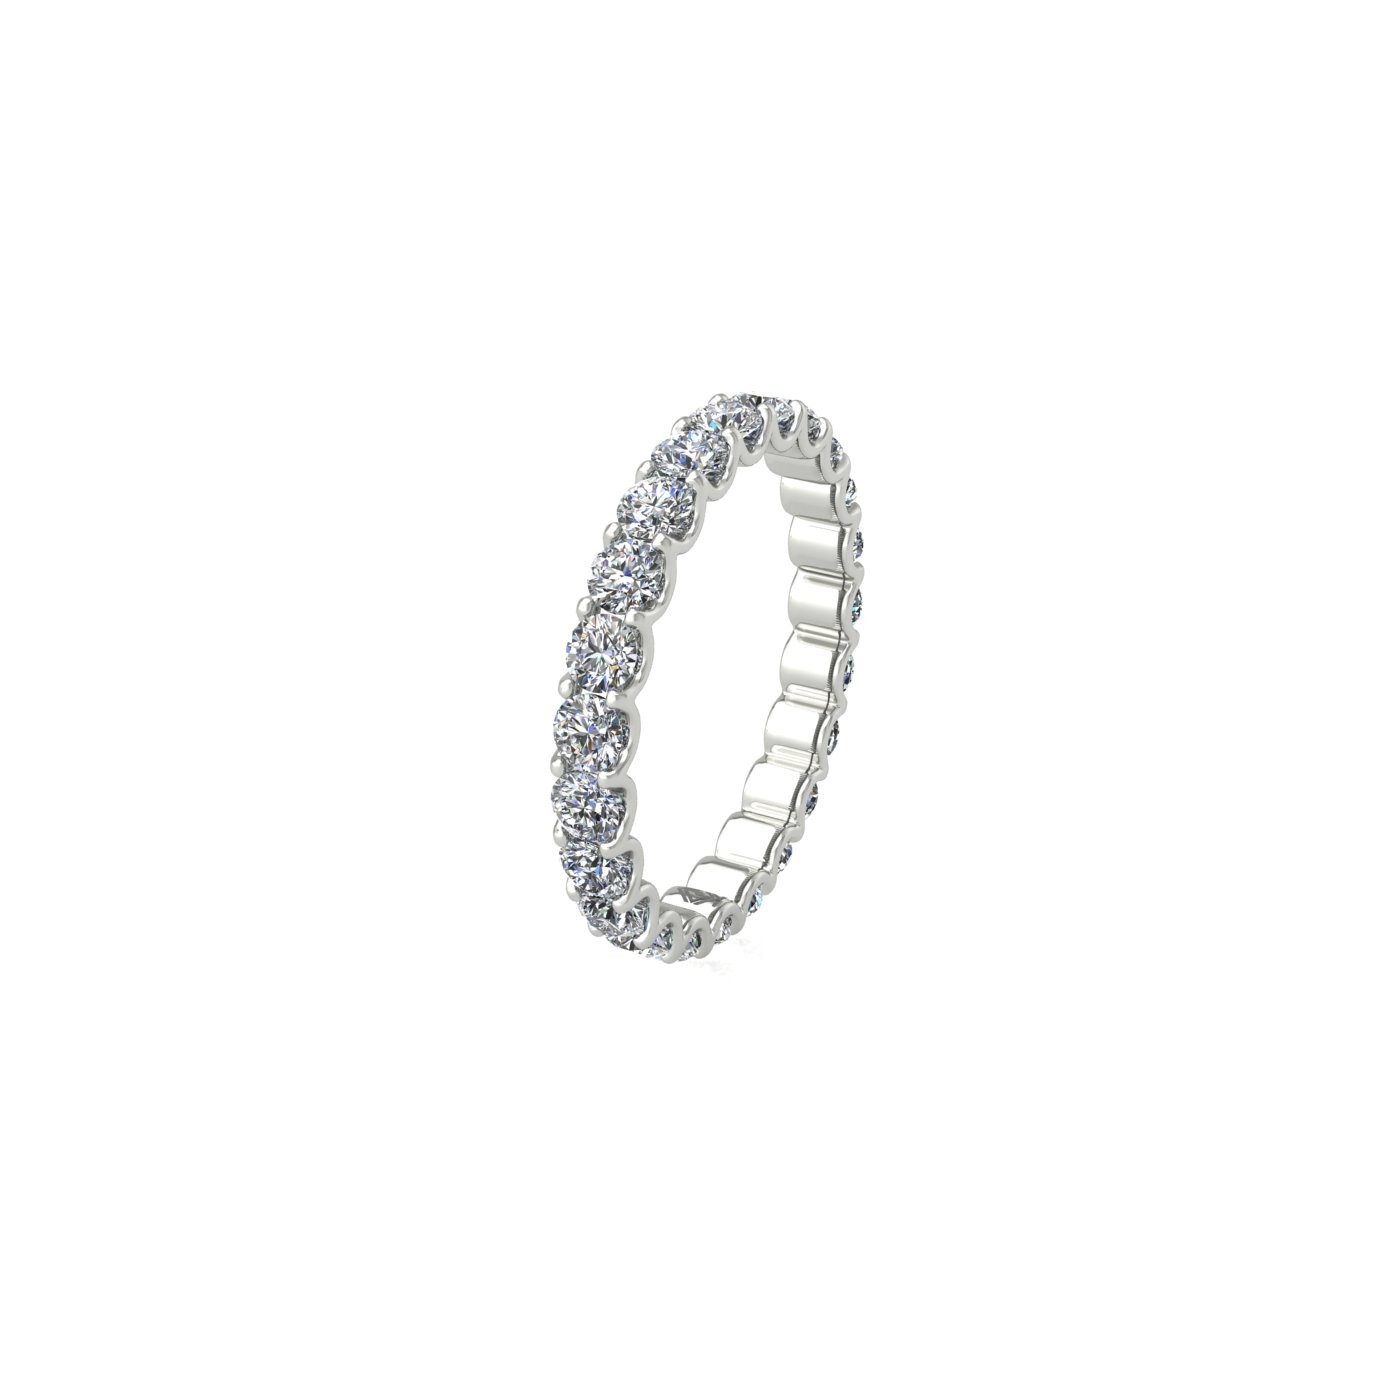 18k white gold  round shape diamond full eternity ring in u-prong setting